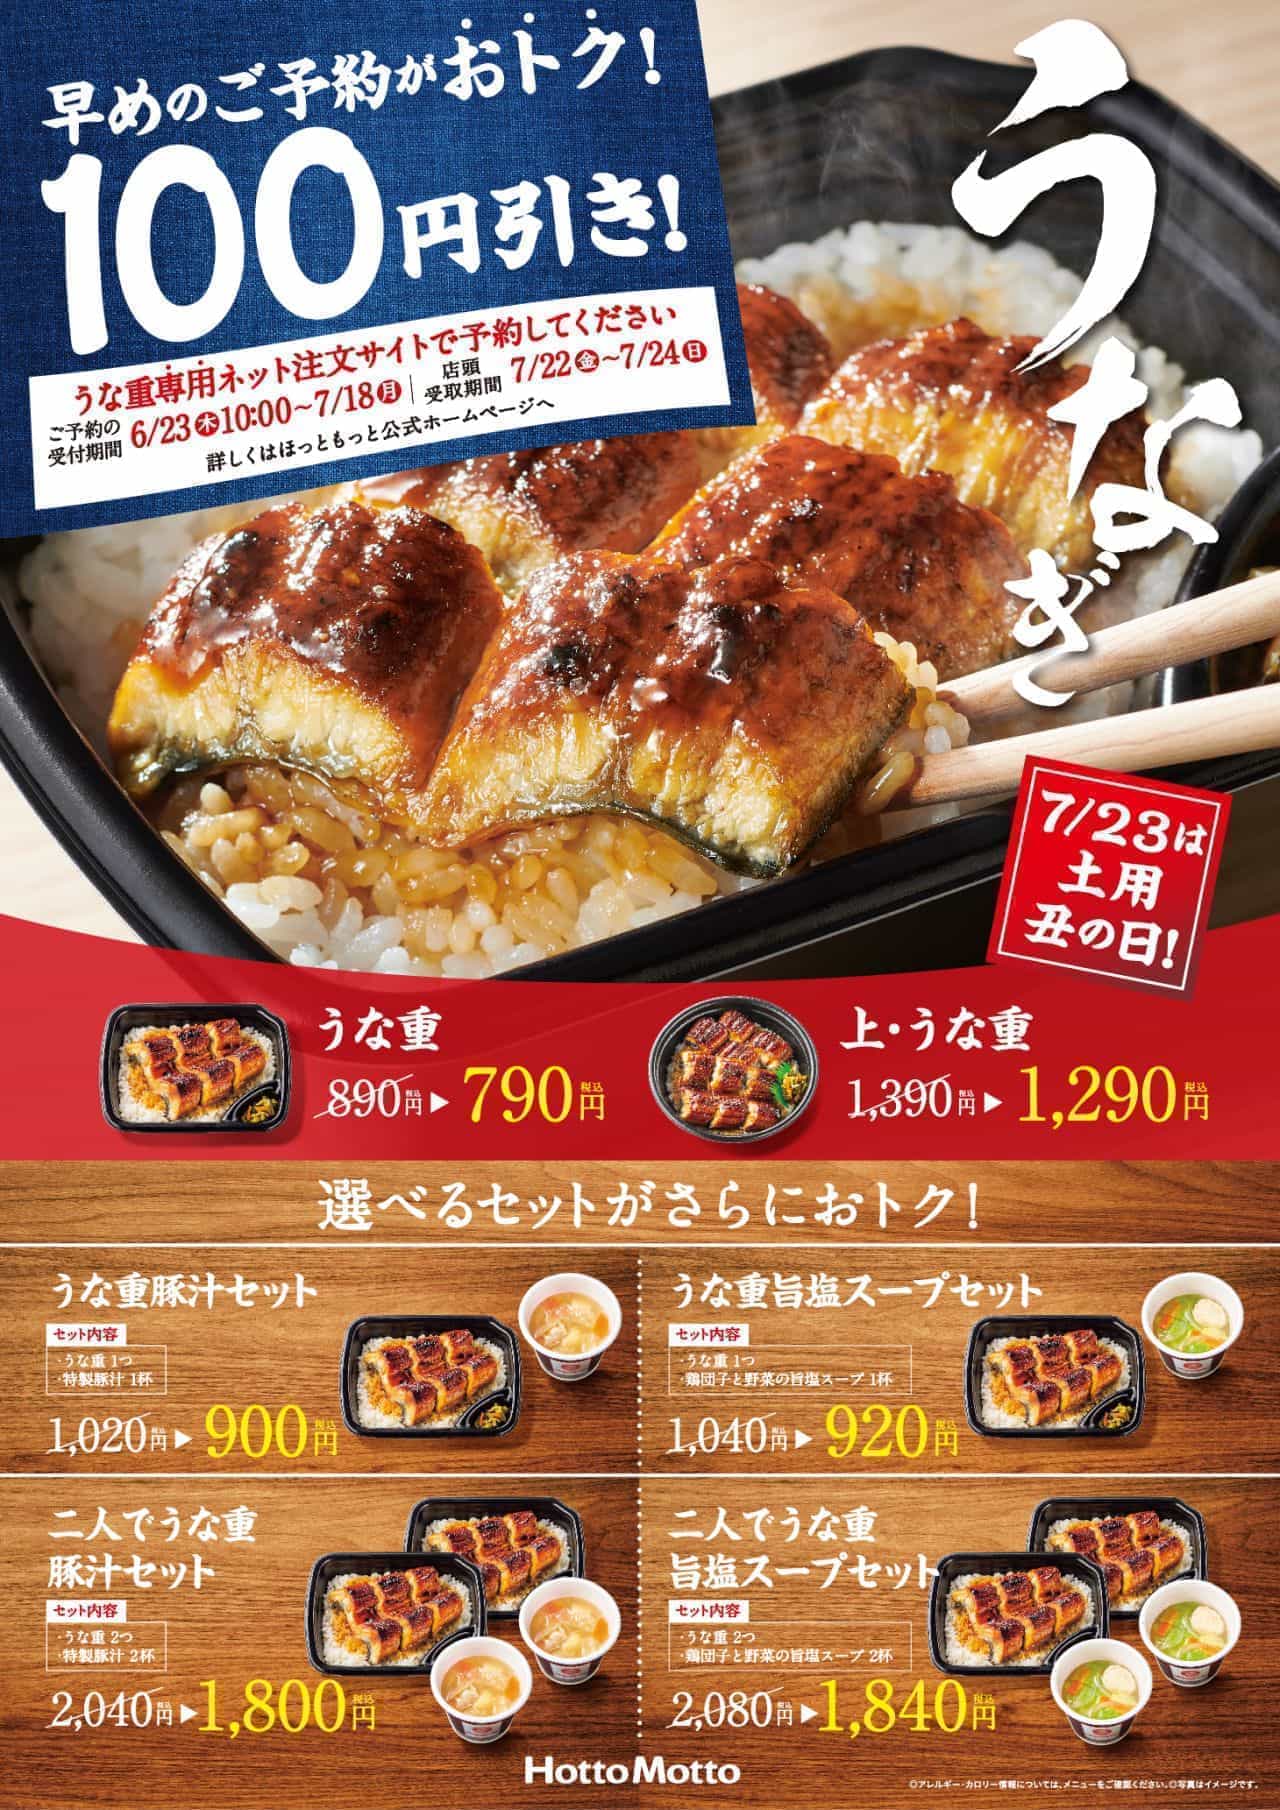 Hotto Motto "Unaju" and "Kami-Unaju" 100 yen discount campaign for reservations